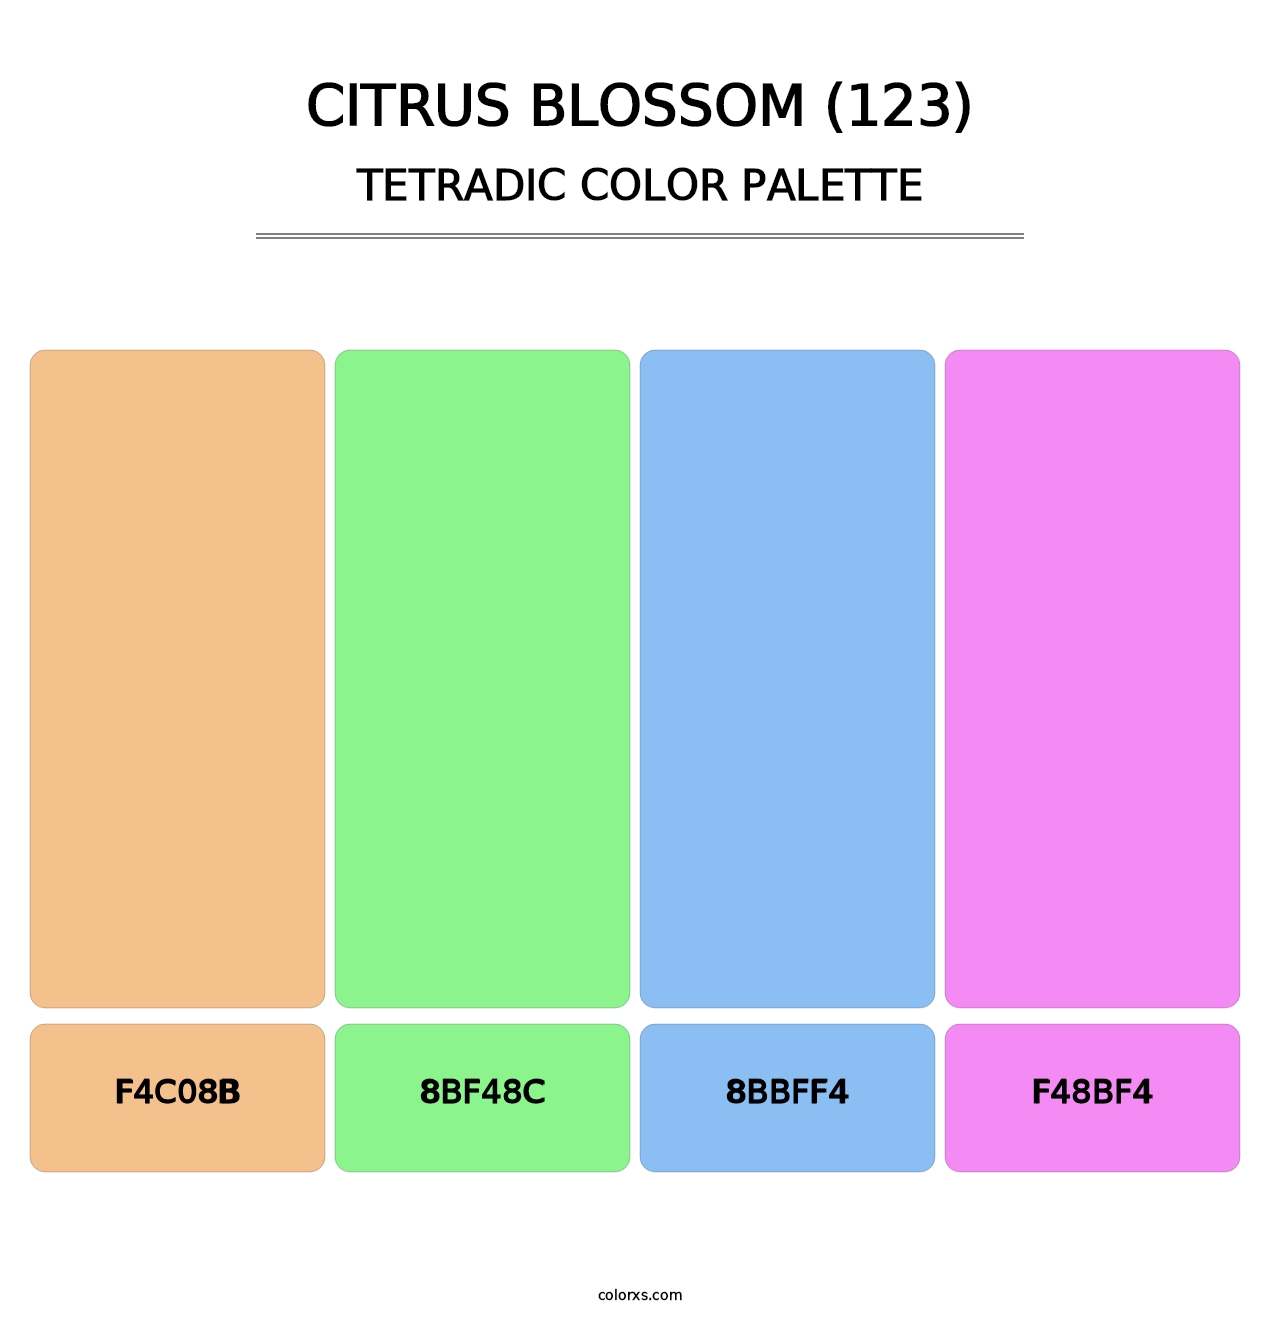 Citrus Blossom (123) - Tetradic Color Palette